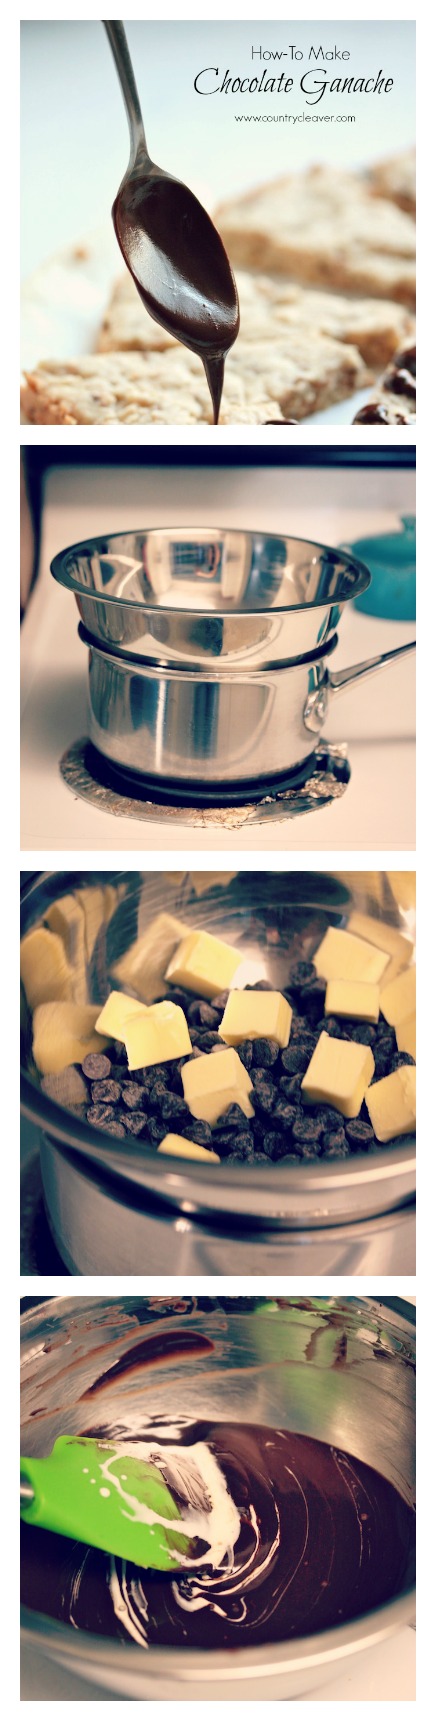 How to Make Chocolate Ganache - So Easy!